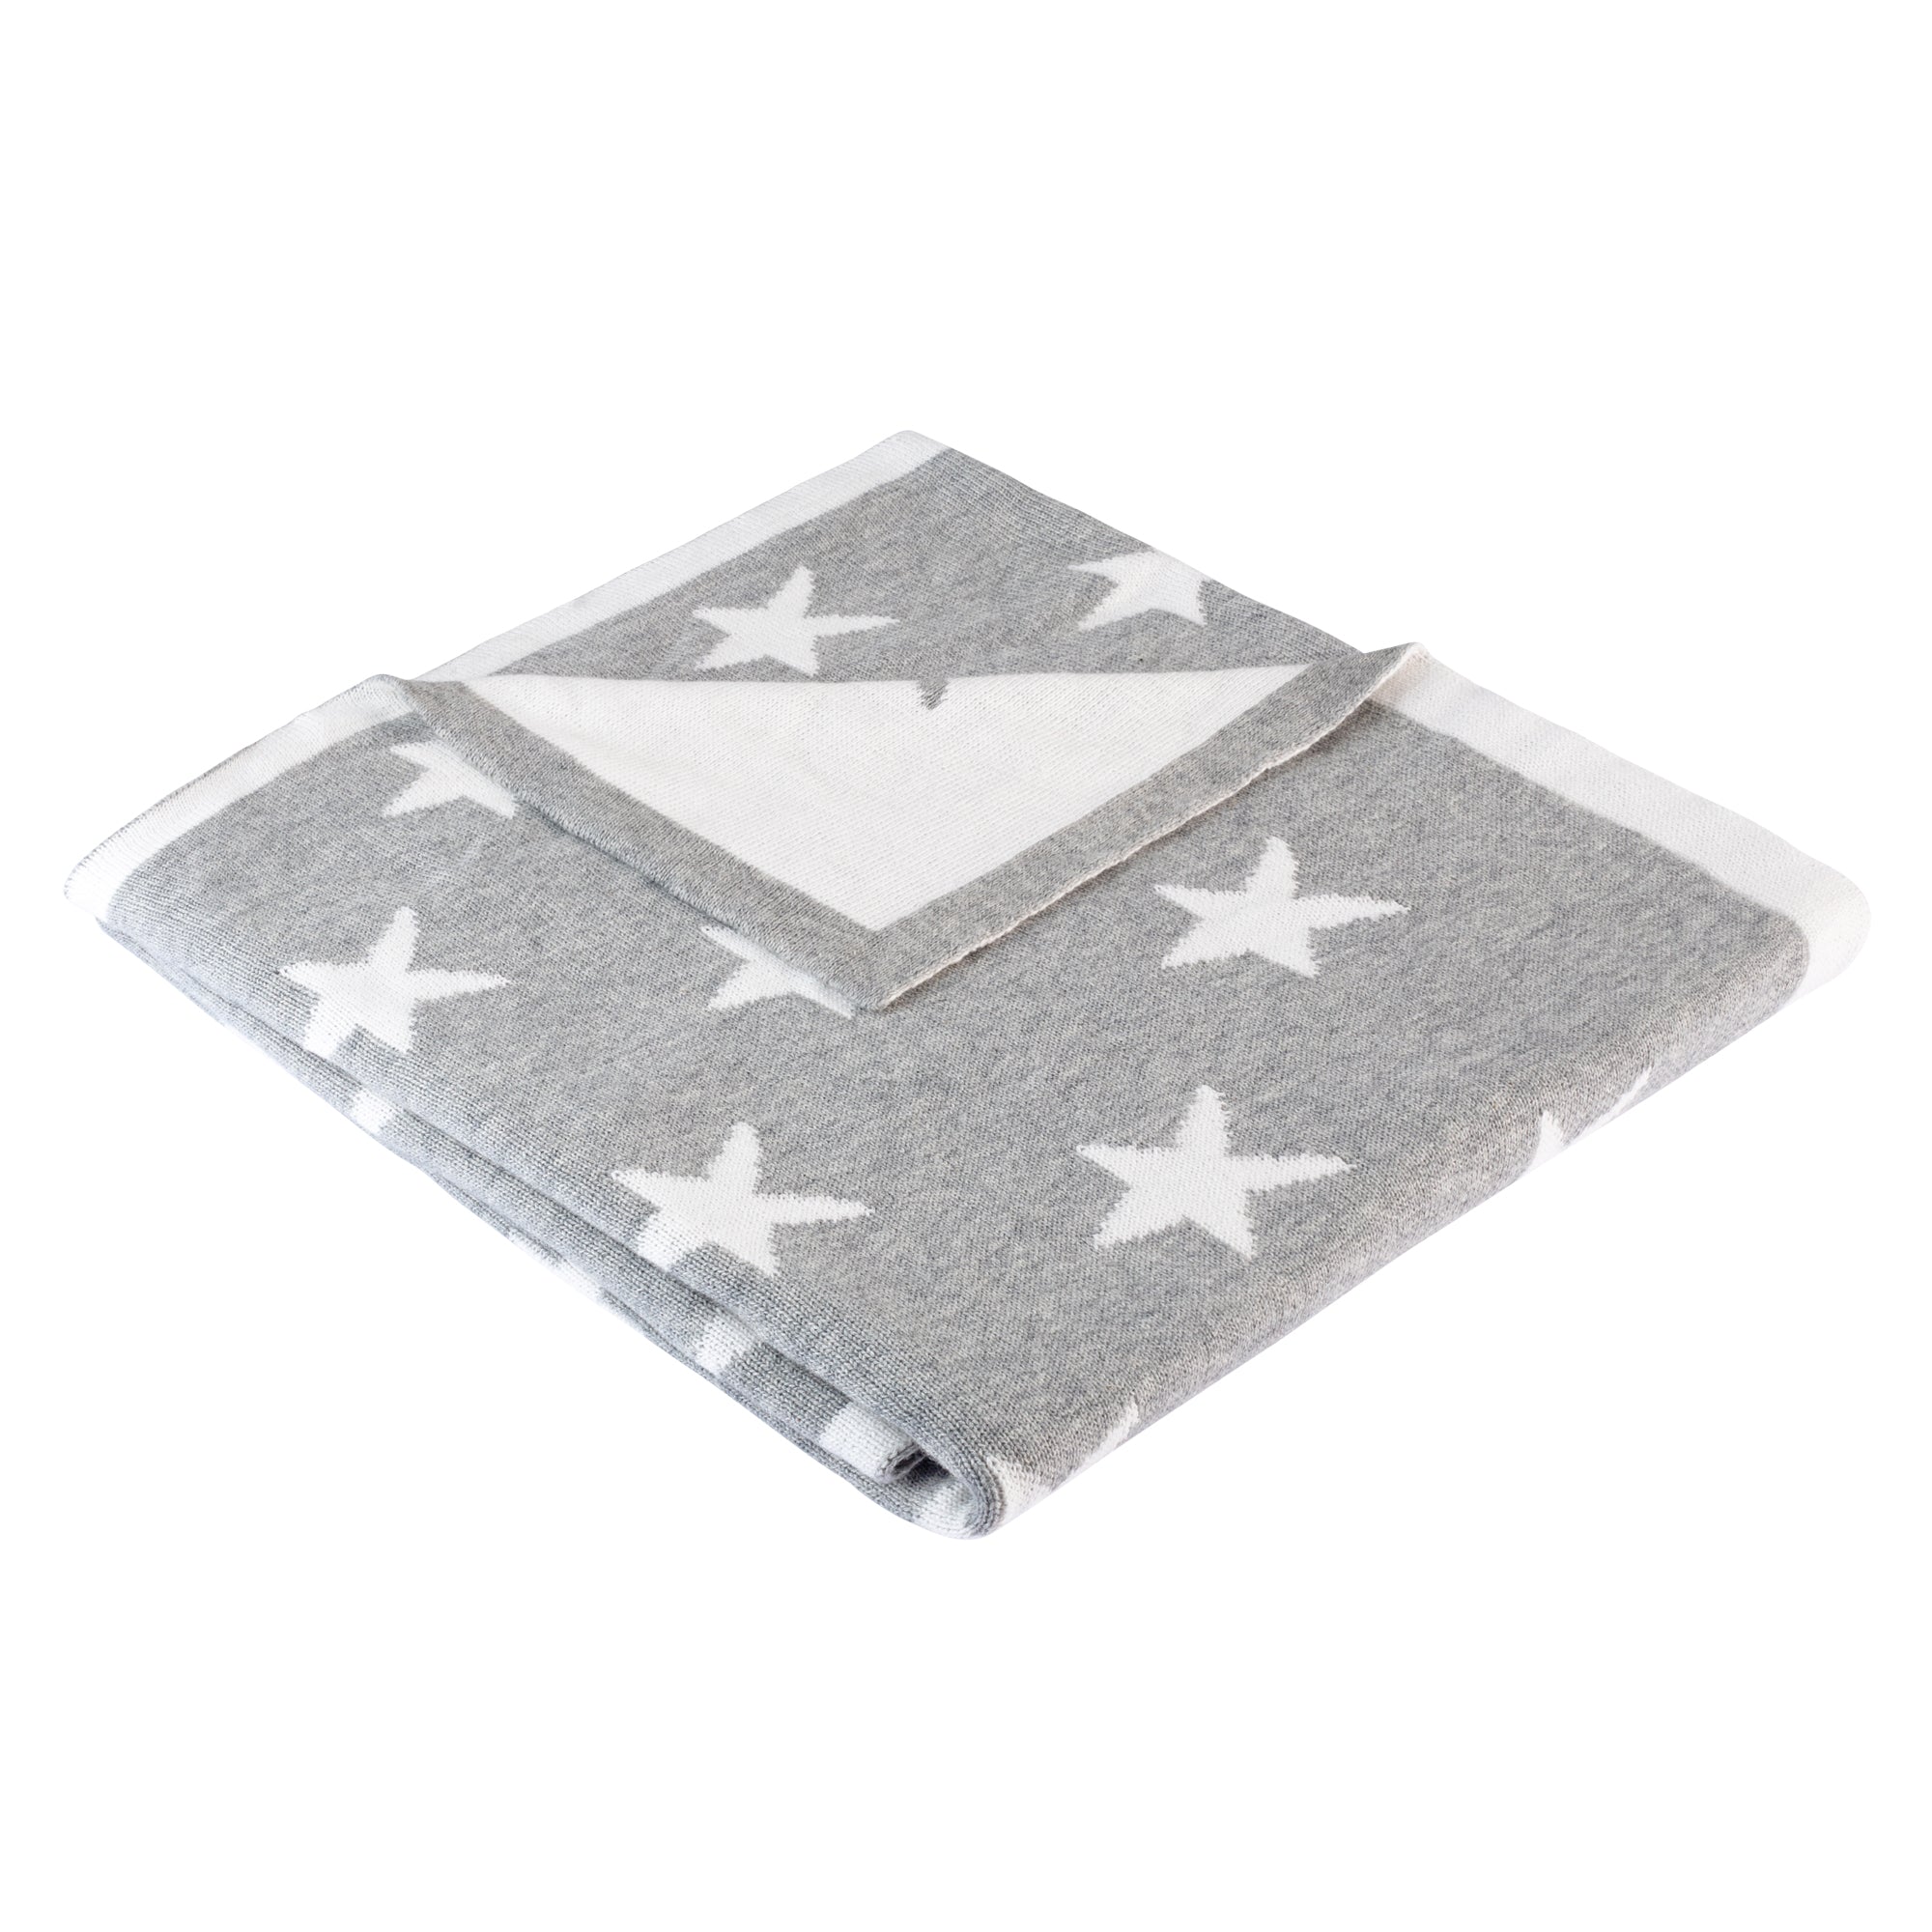 Grey & White Knit Baby Blanket by Mini Pocket Minipocket